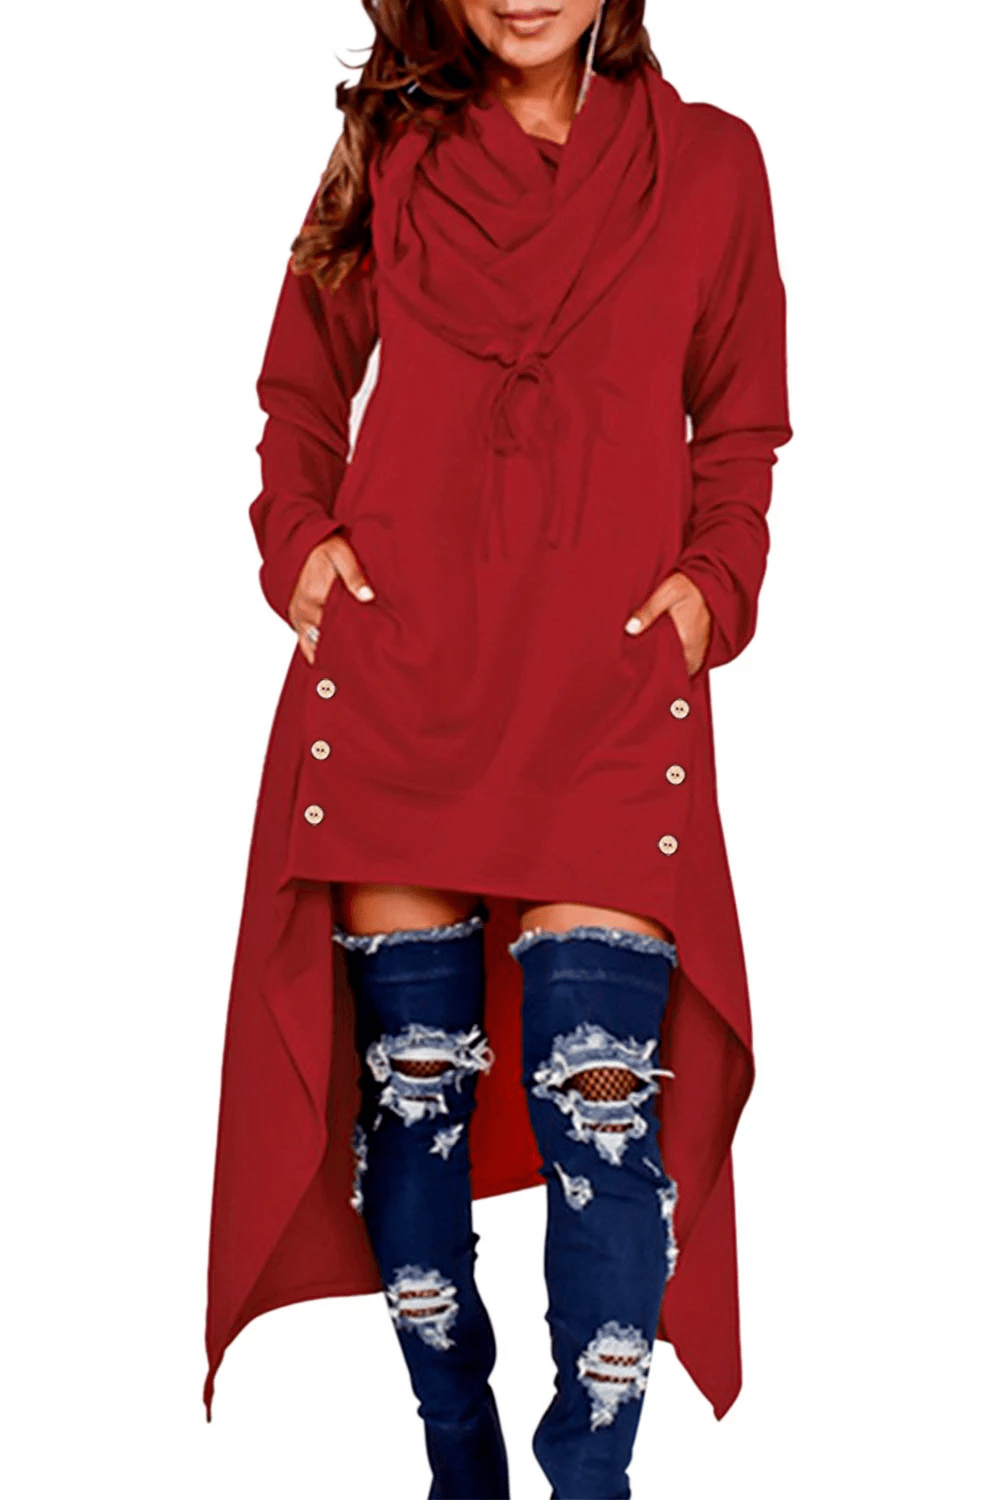 PLUS SIZE | FLY GIRL Red Asymmetric Hem Hooded Dress Top - spazz26